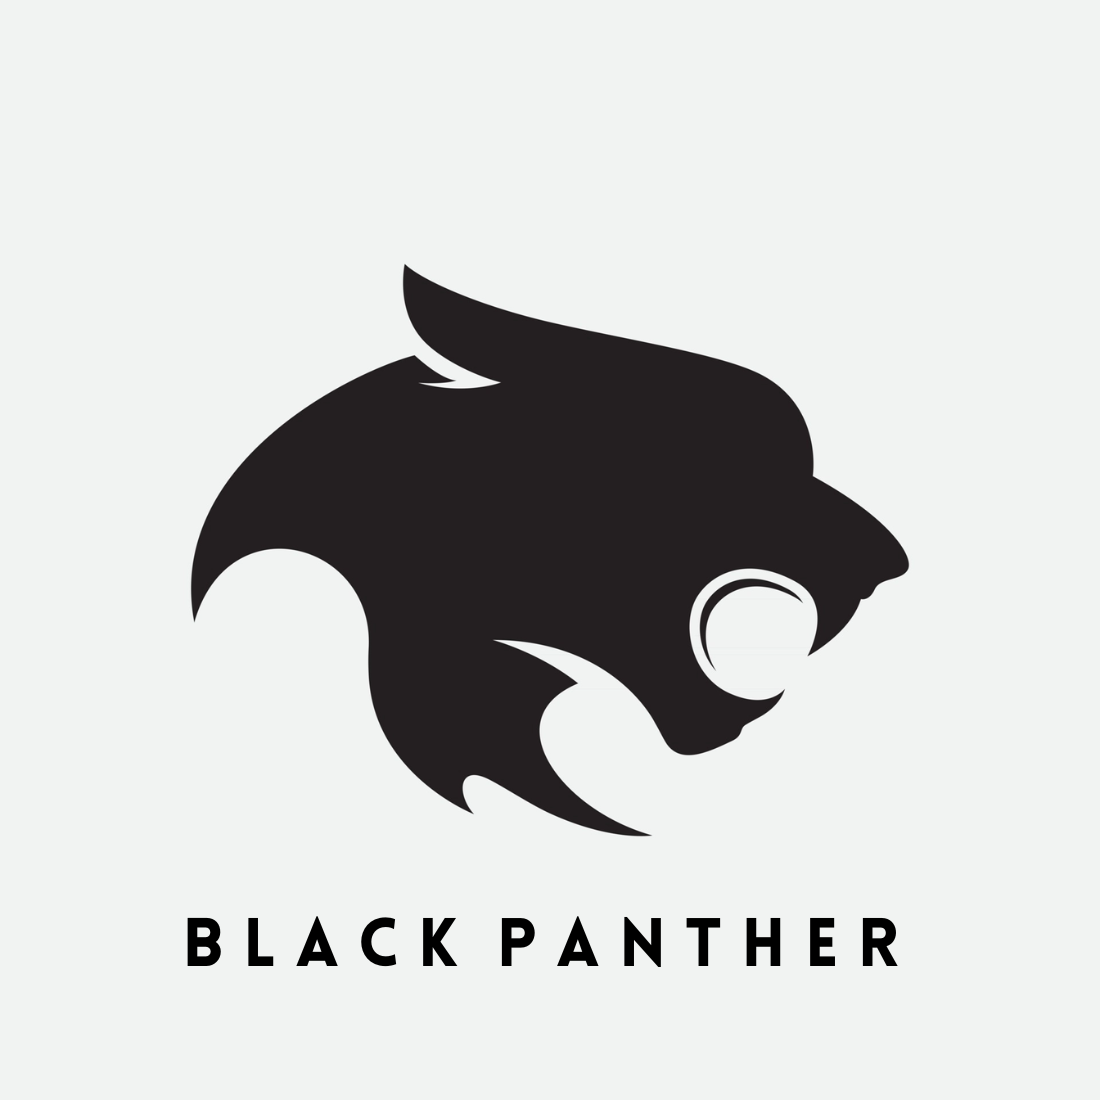 Black Panther Logo cover image.